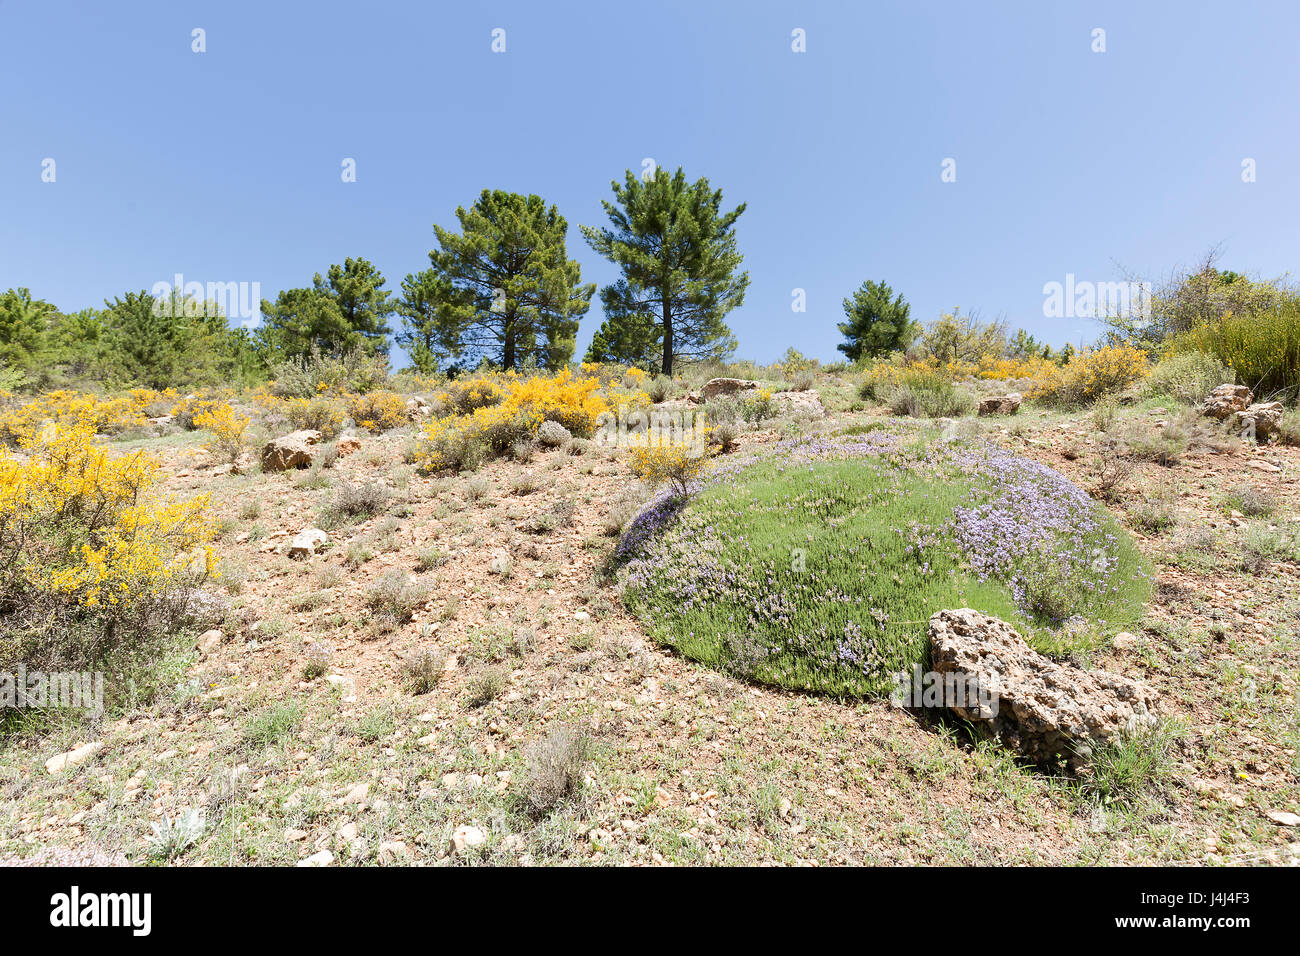 Paesaggio in Cañadas de Haches de Arriba, Bogarra provincia di Albacete in Spagna. Foto Stock